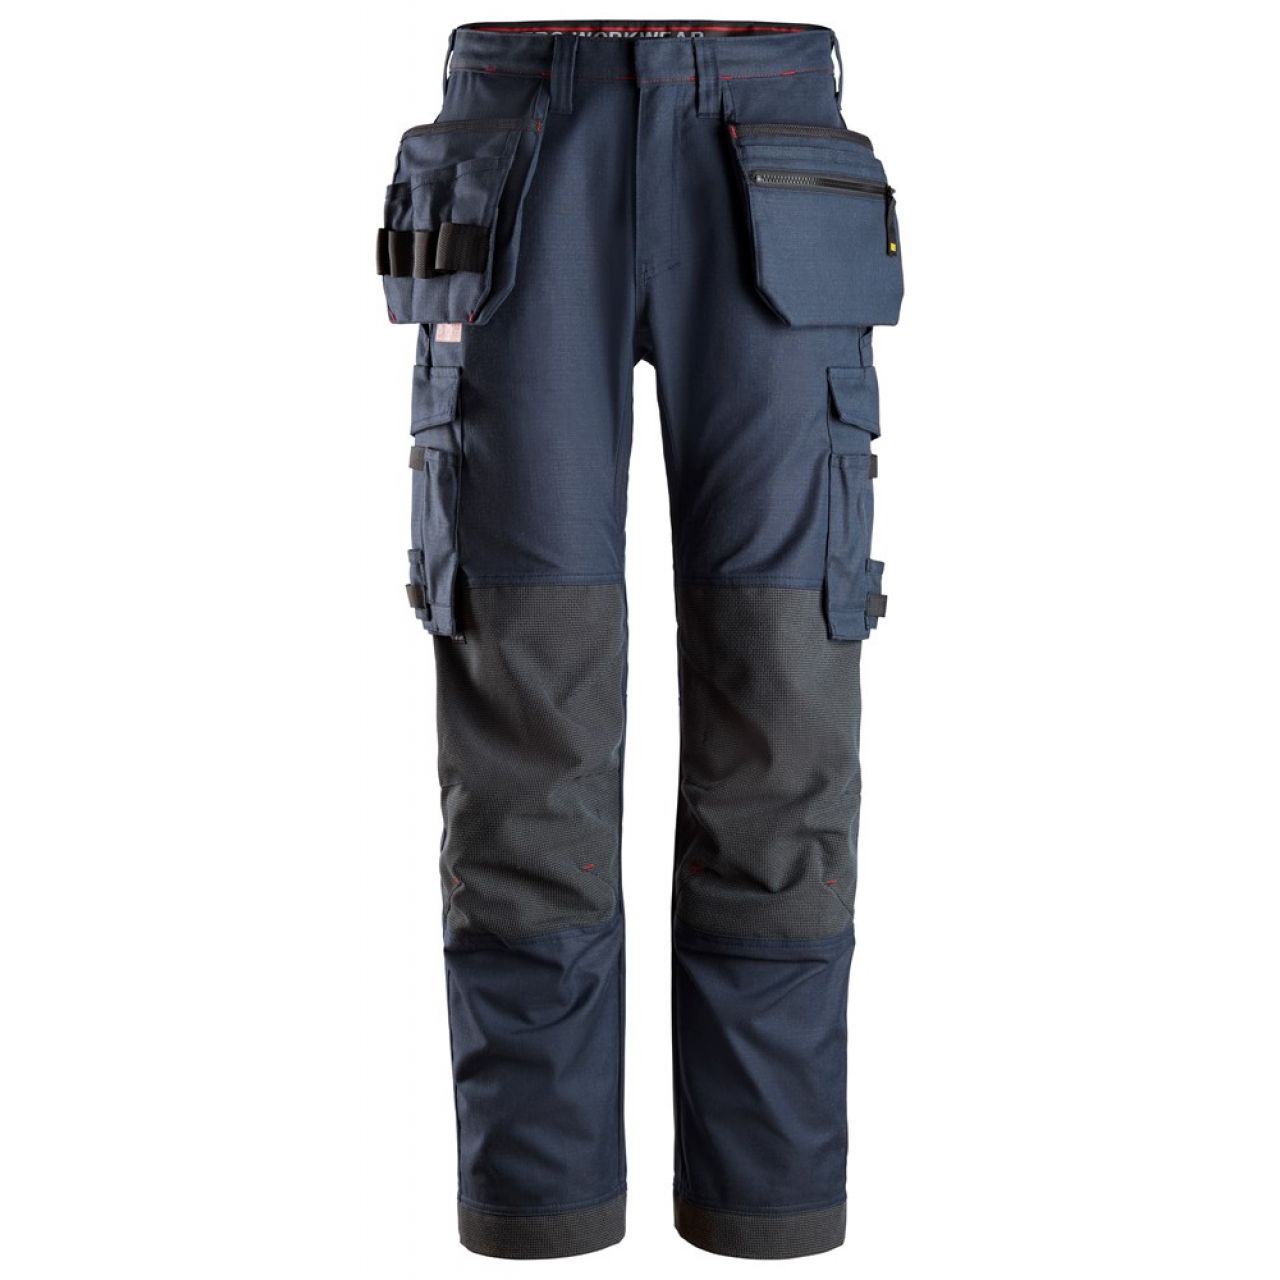 6262 Pantalones largos de trabajo con bolsillos flotantes simétricos ProtecWork azul marino talla 88